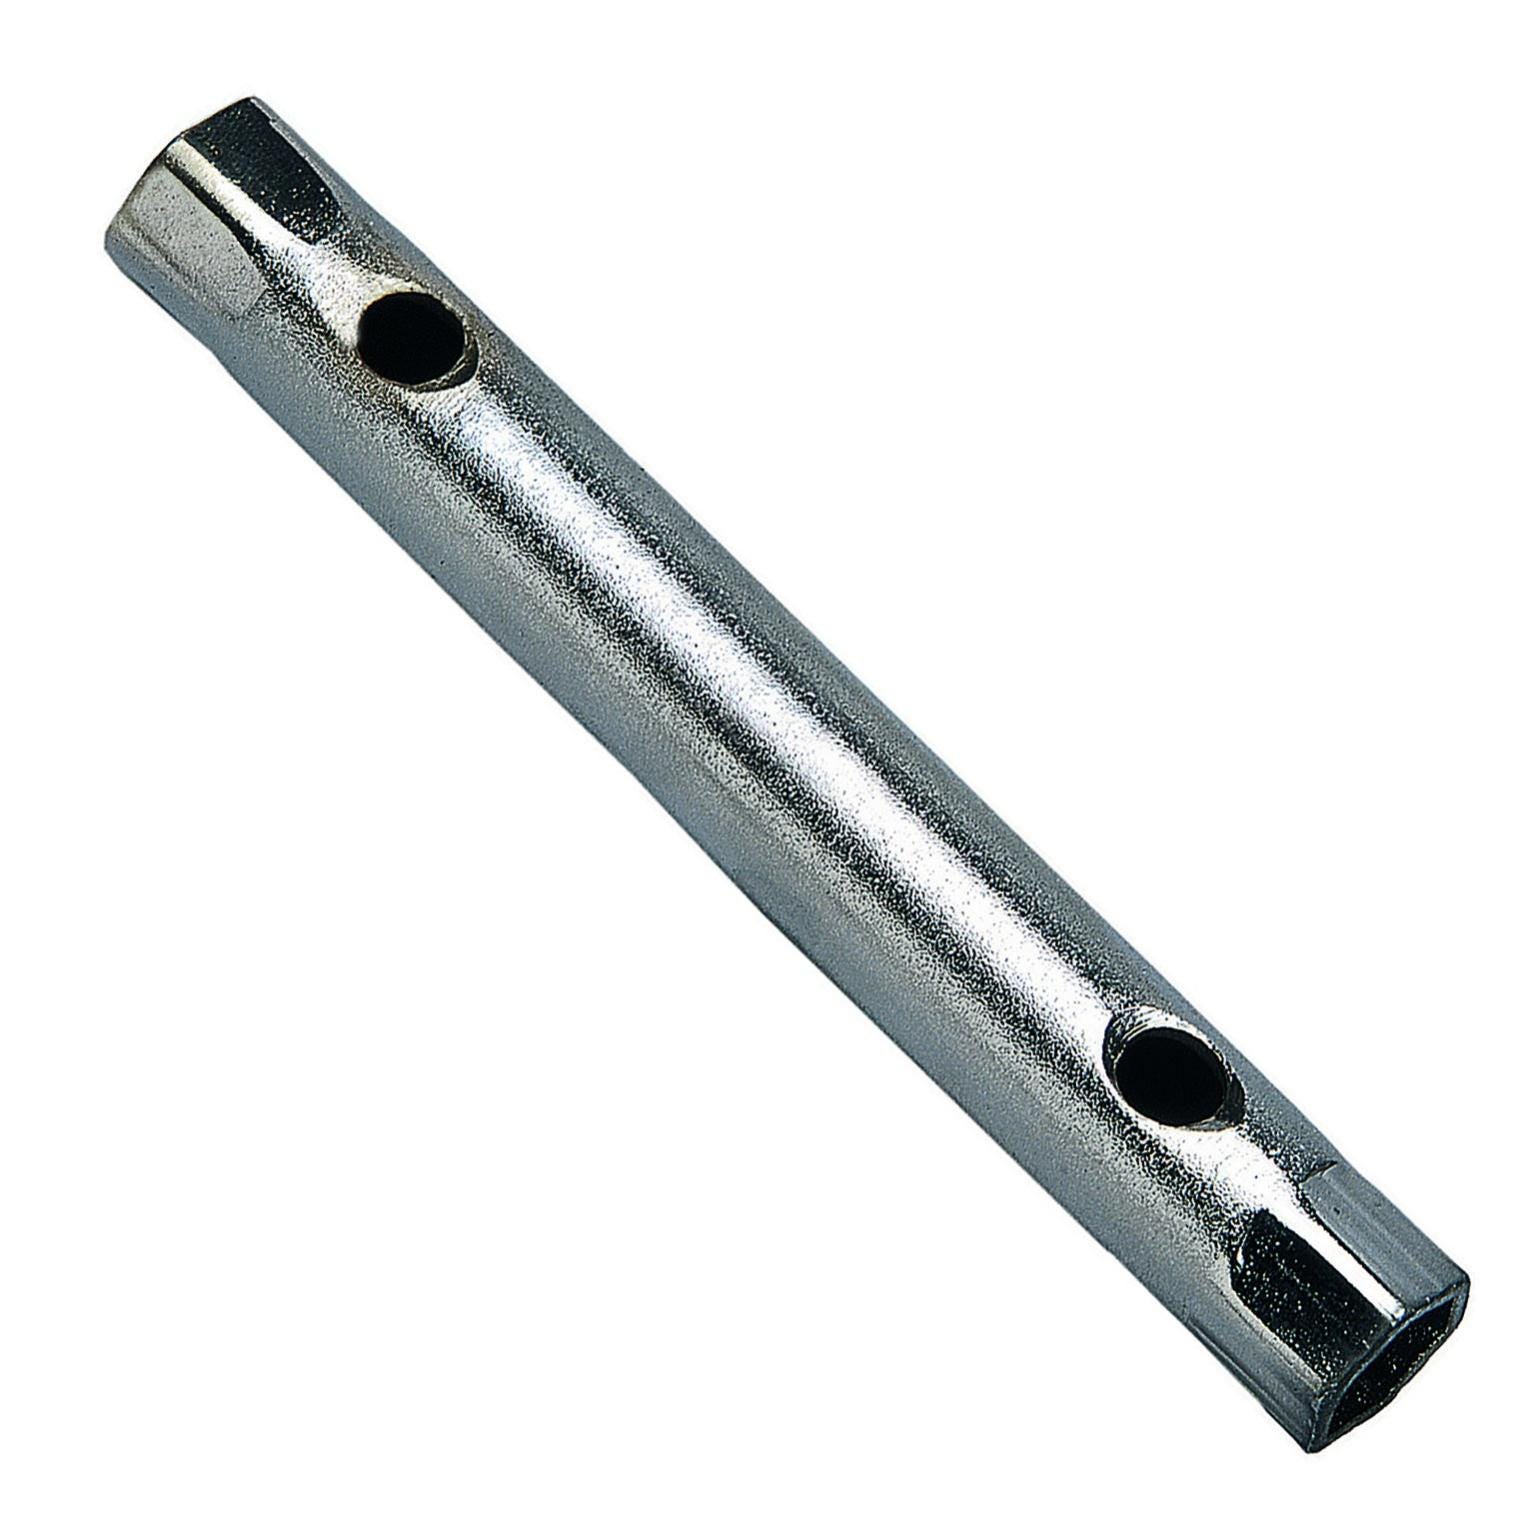 Chiave a tubo esagonale 9 mm in acciaio